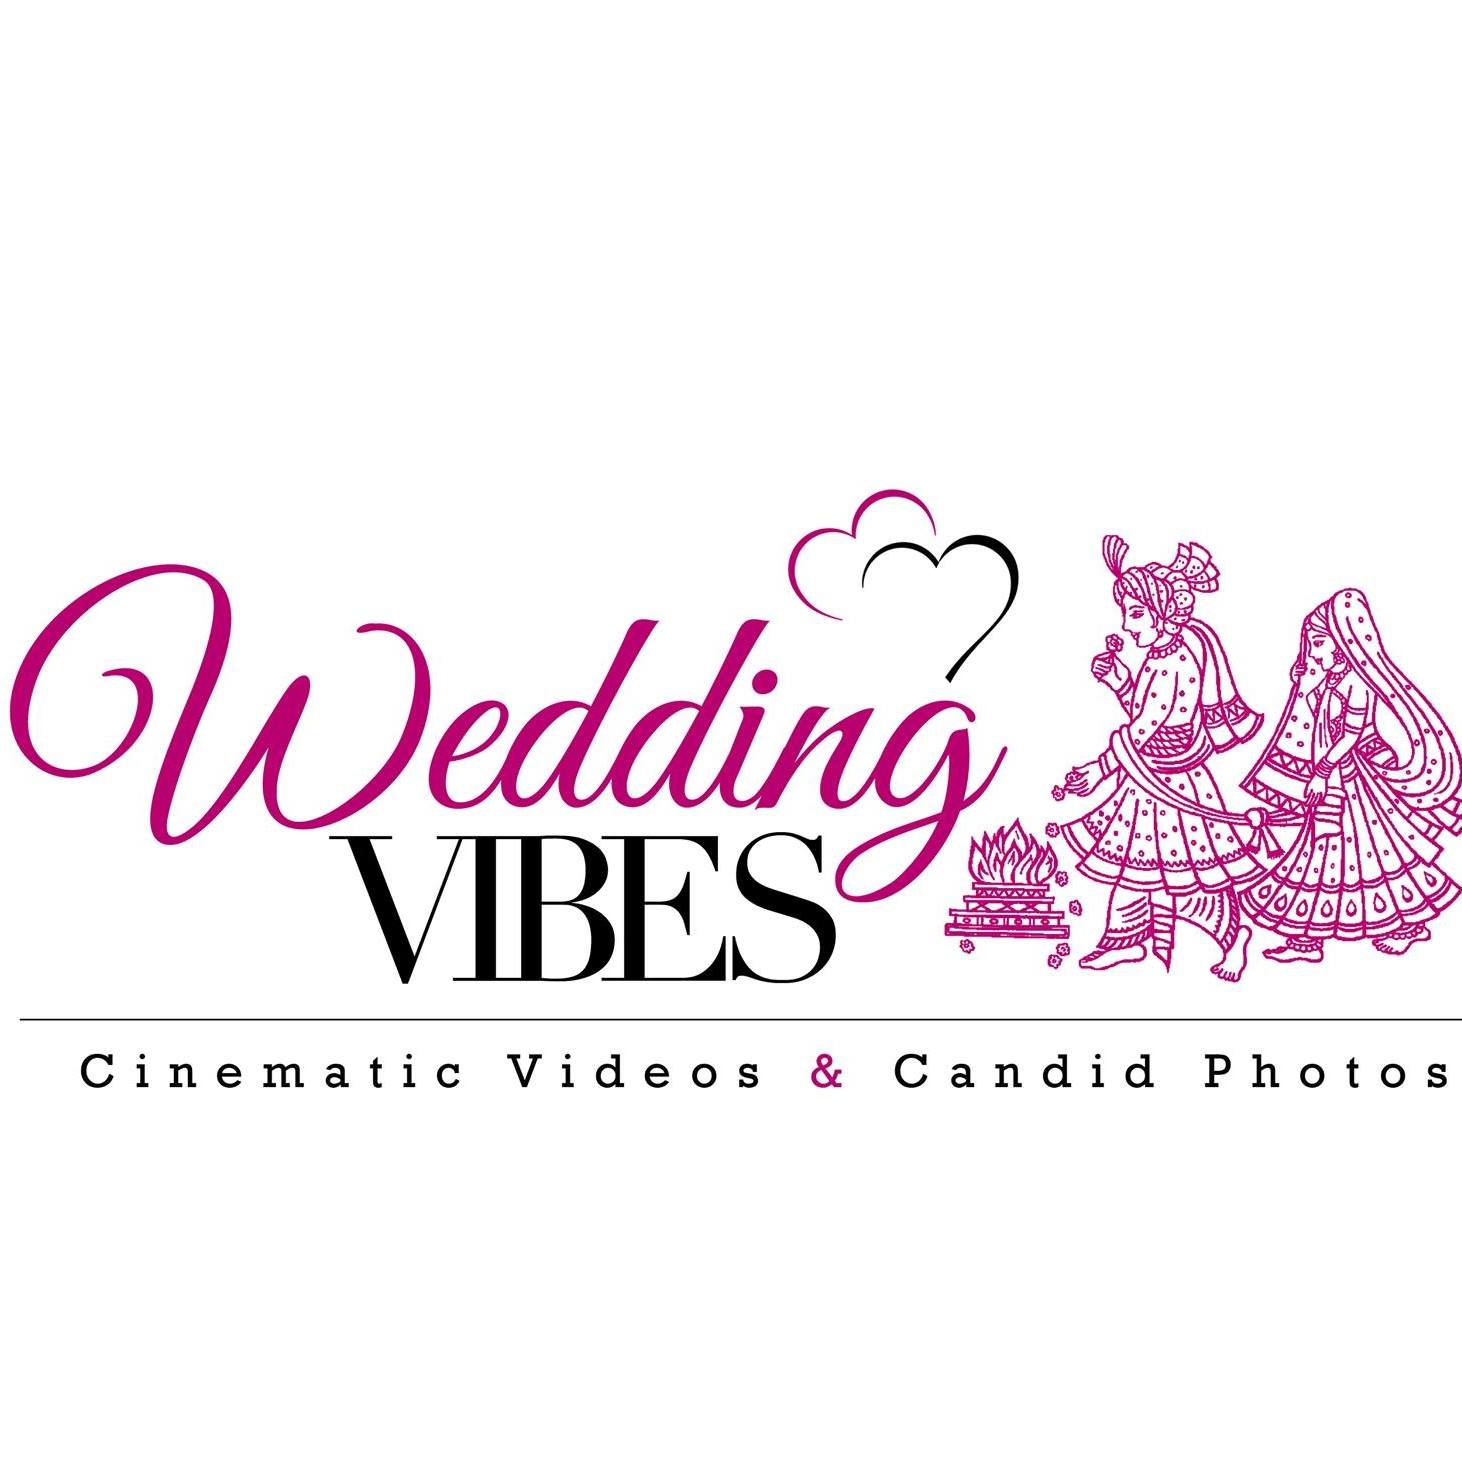 Wedding vibes|Photographer|Event Services